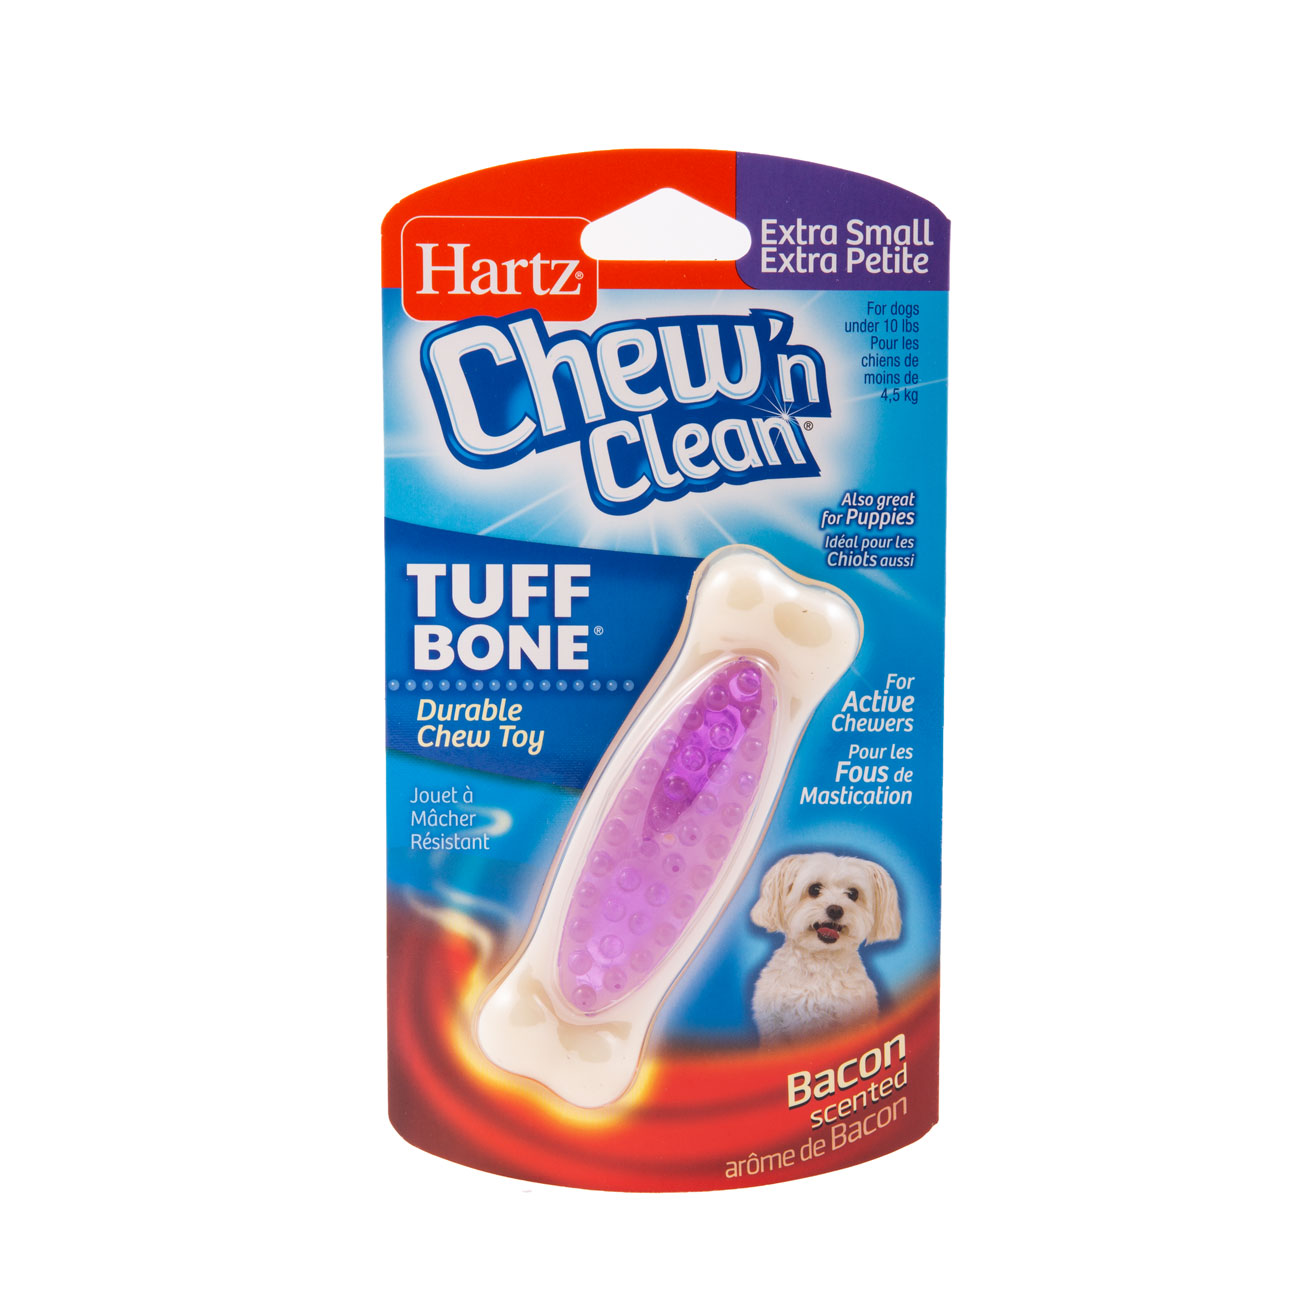 An extra tiny purple dental treat for petite dogs, Hartz SKU 3270014777